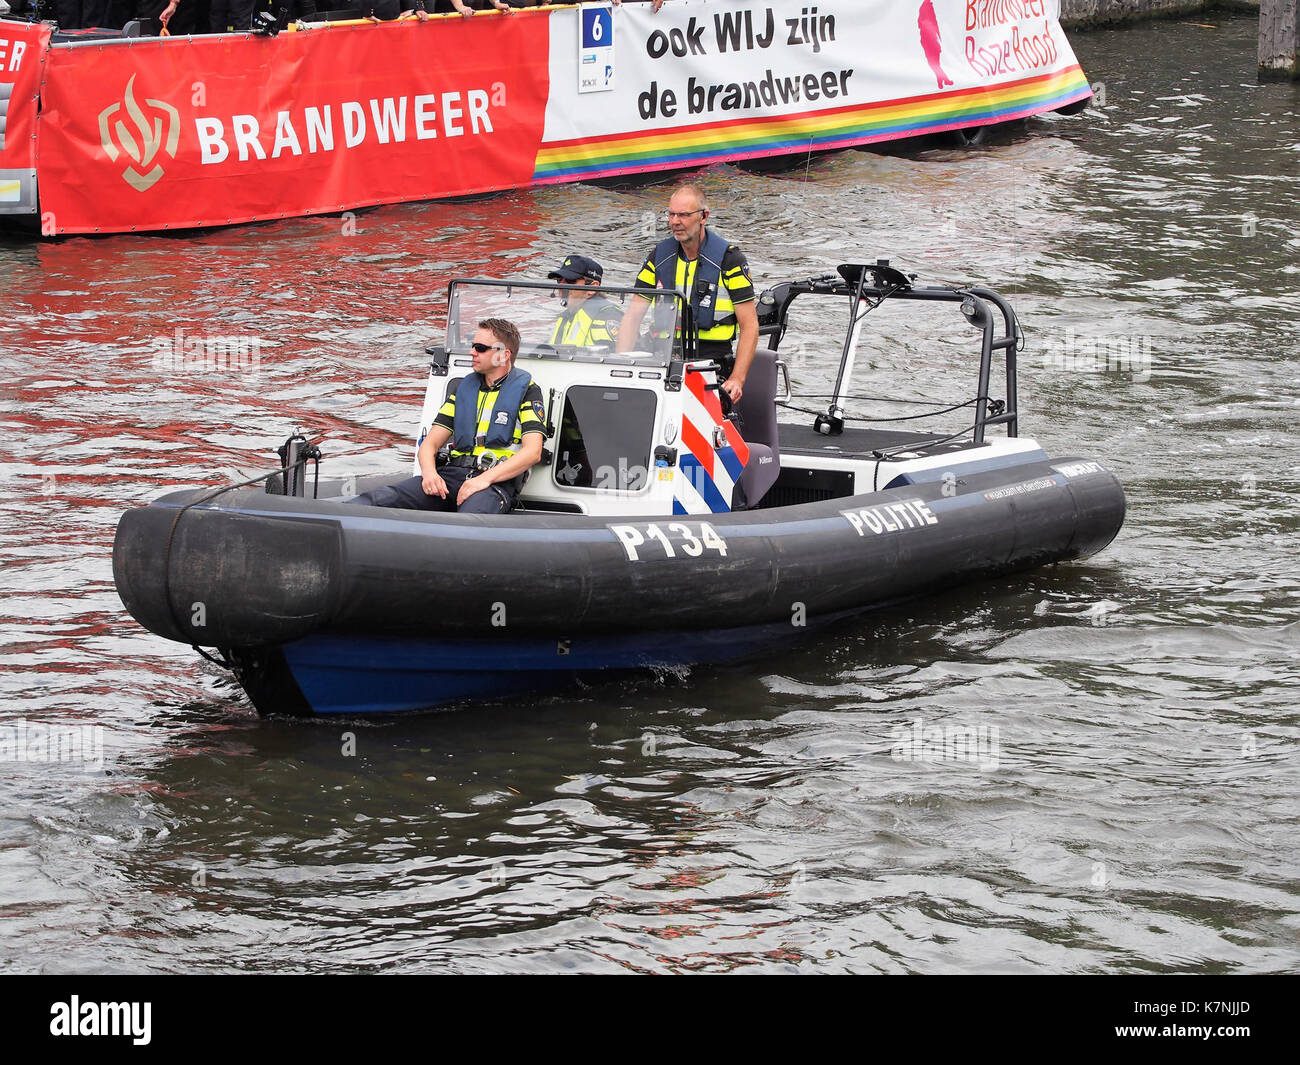 P134 Politie, Canal Parade Amsterdam 2017 Foto 2 Foto de stock